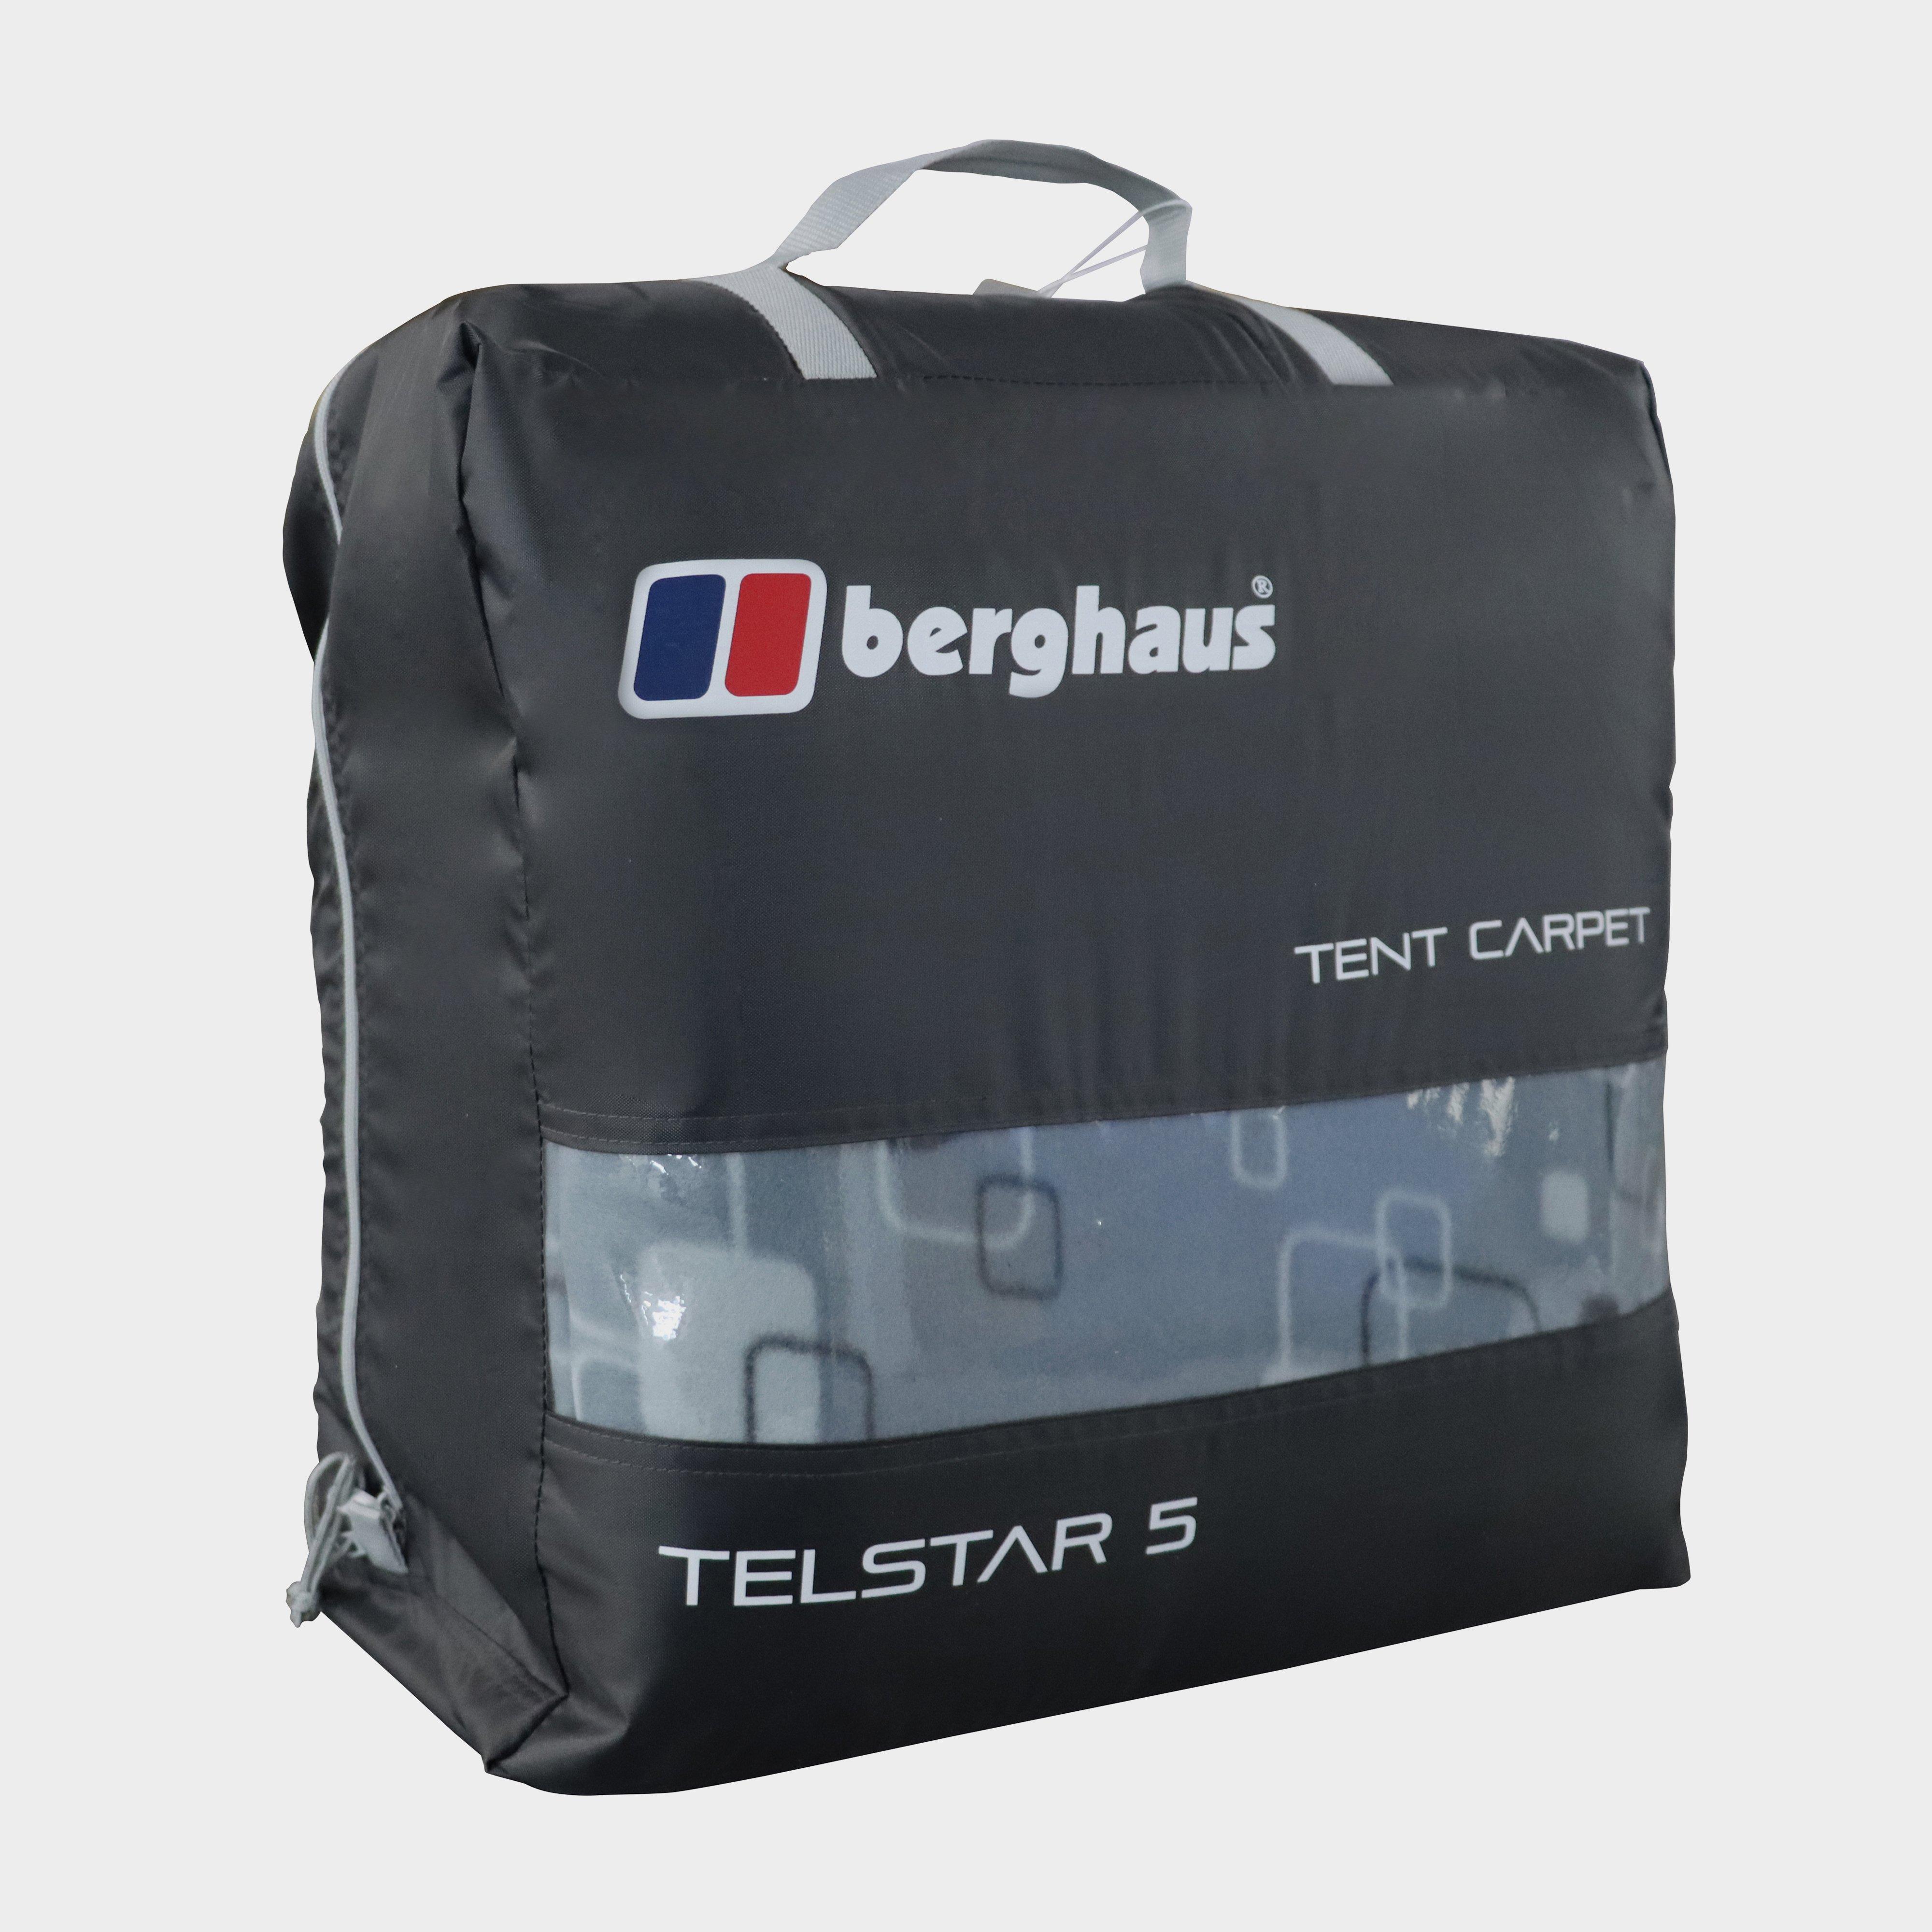 Berghaus Telstar 5 Tent Carpet - Grey/grey  Grey/grey